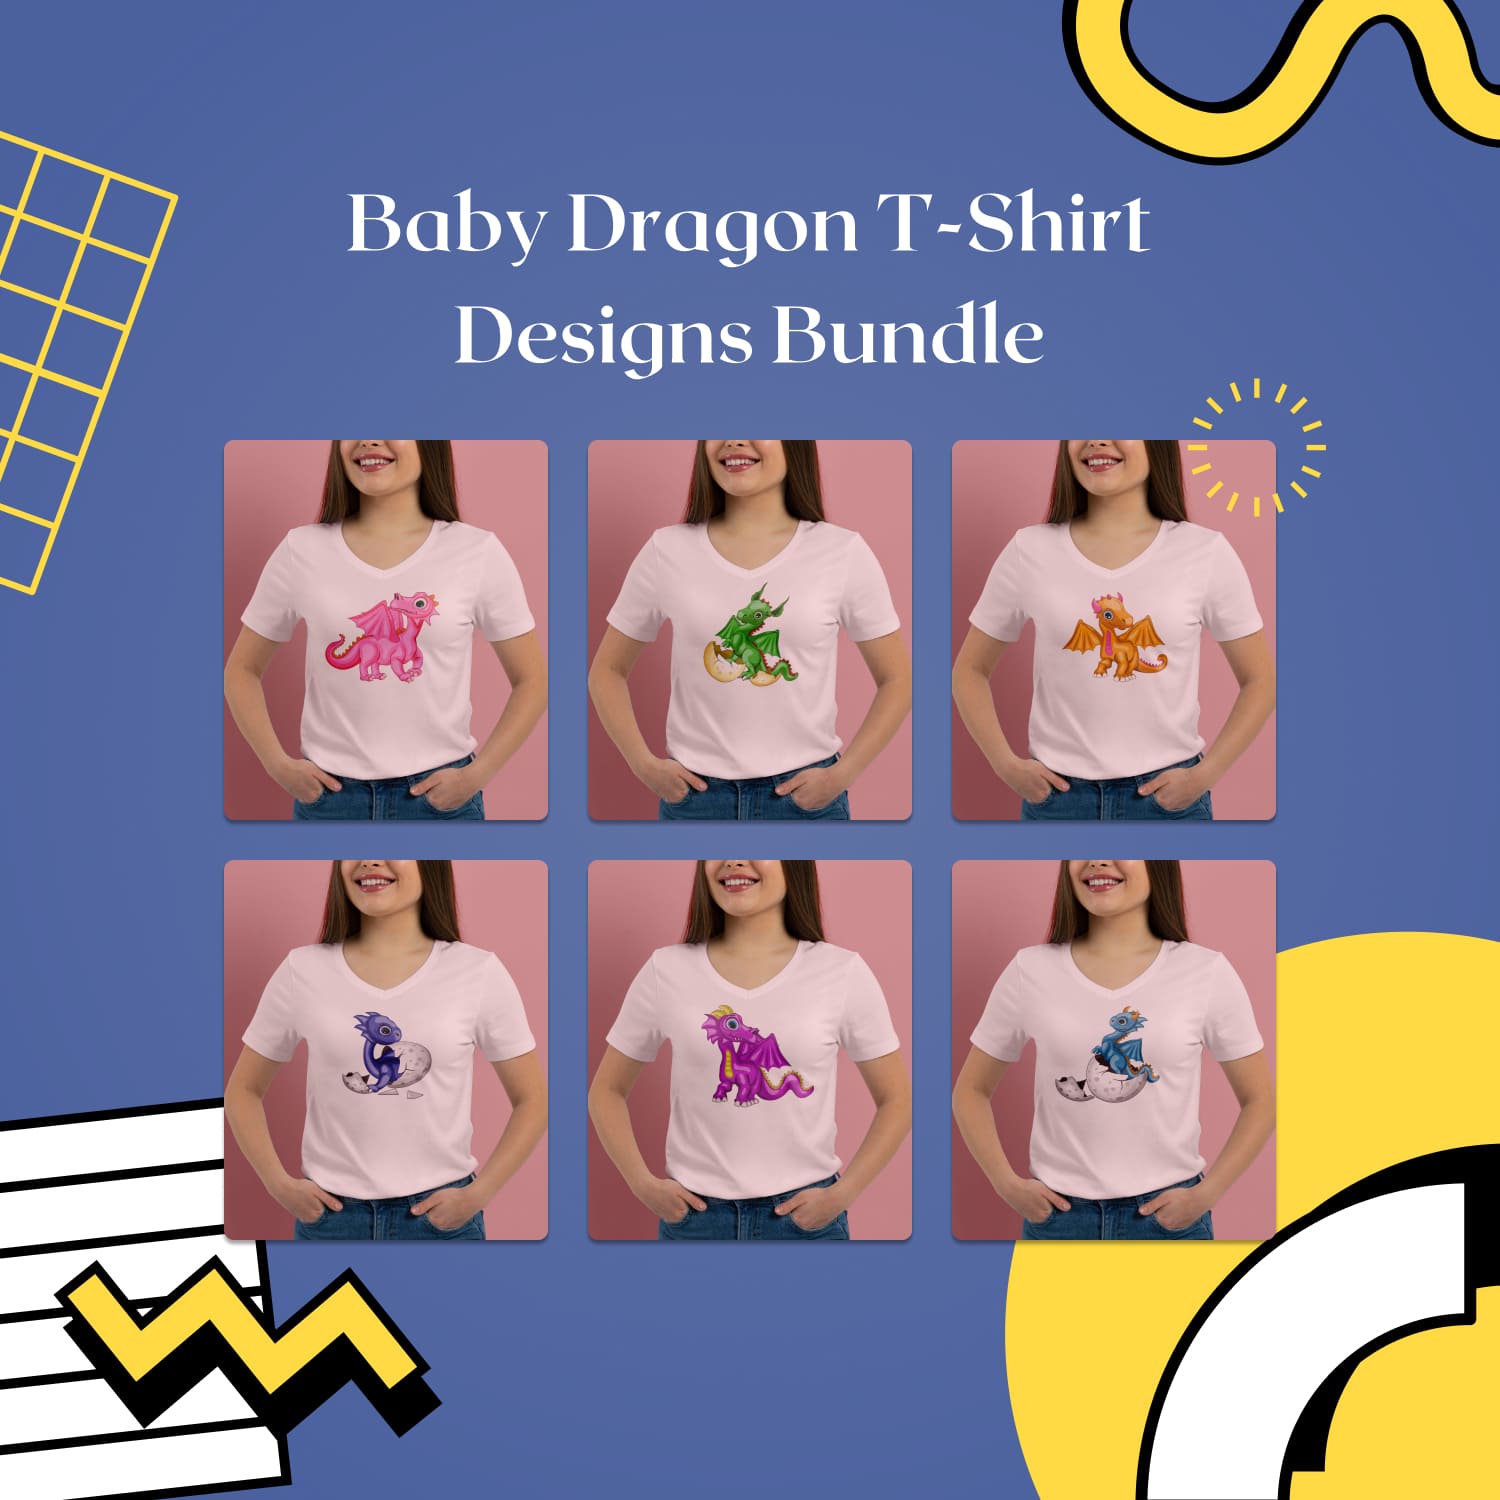 Baby Dragon T-shirt Designs Bundle.